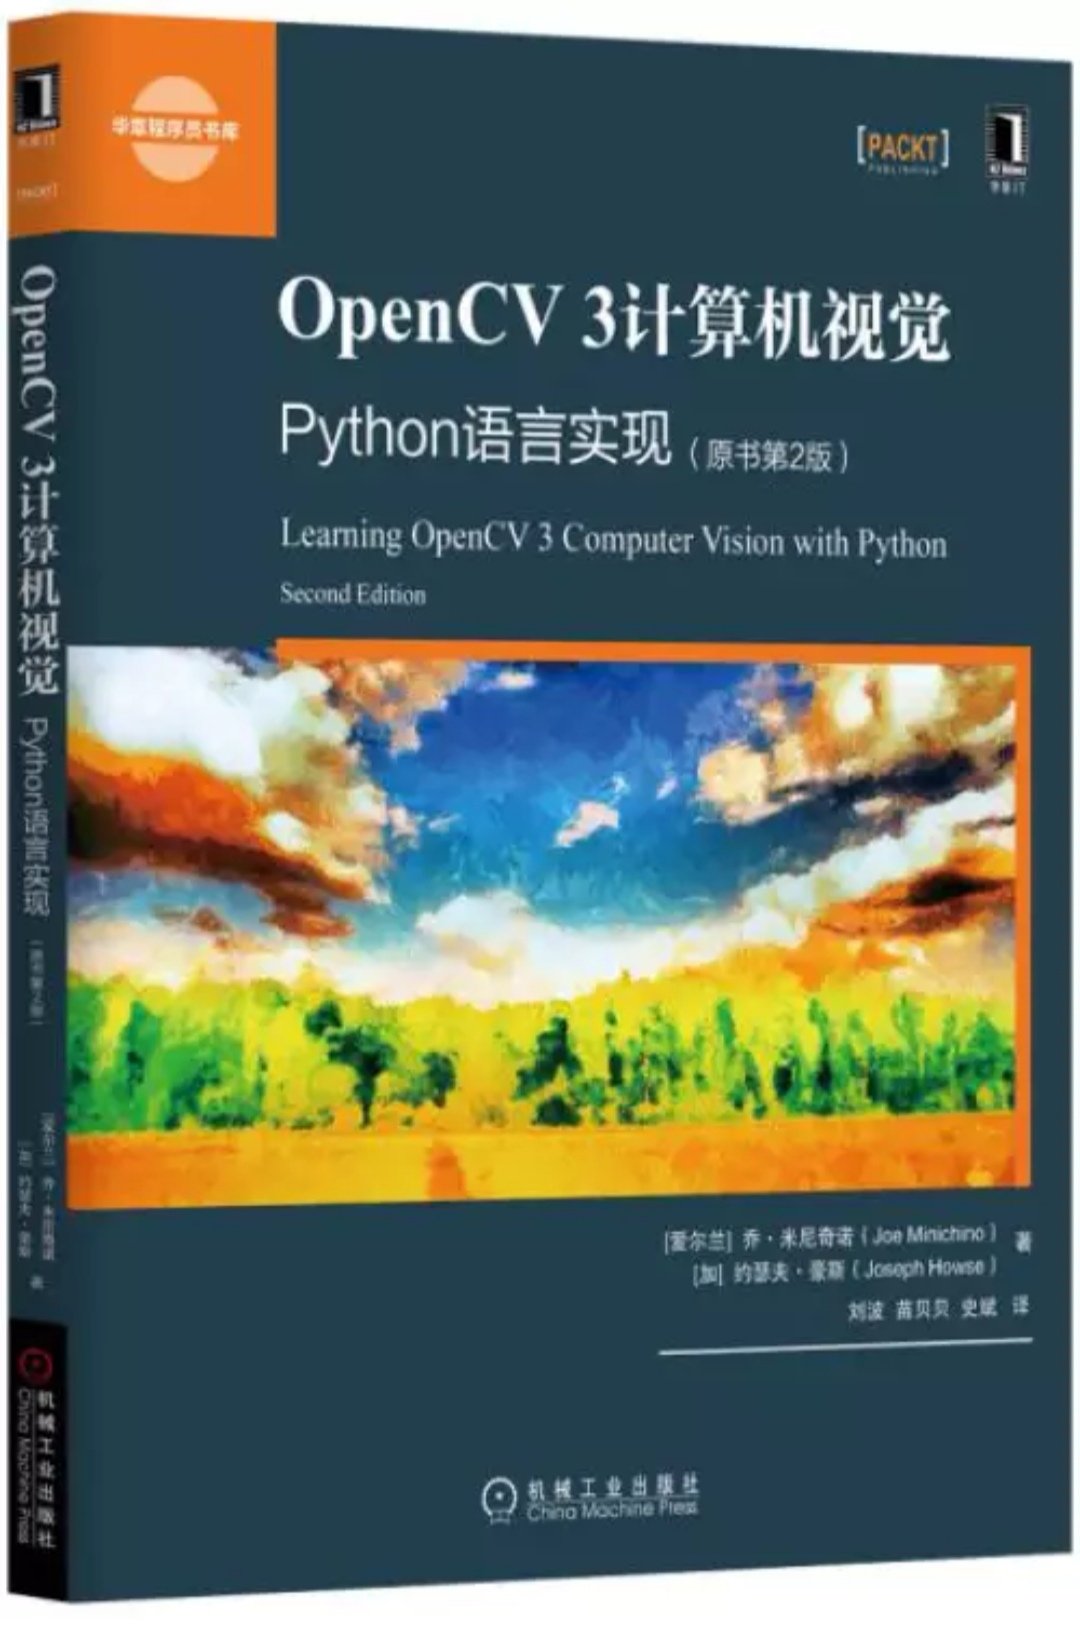 OpenCV 3计算机视觉：Python语言实现（原书第2版）真是不错啊